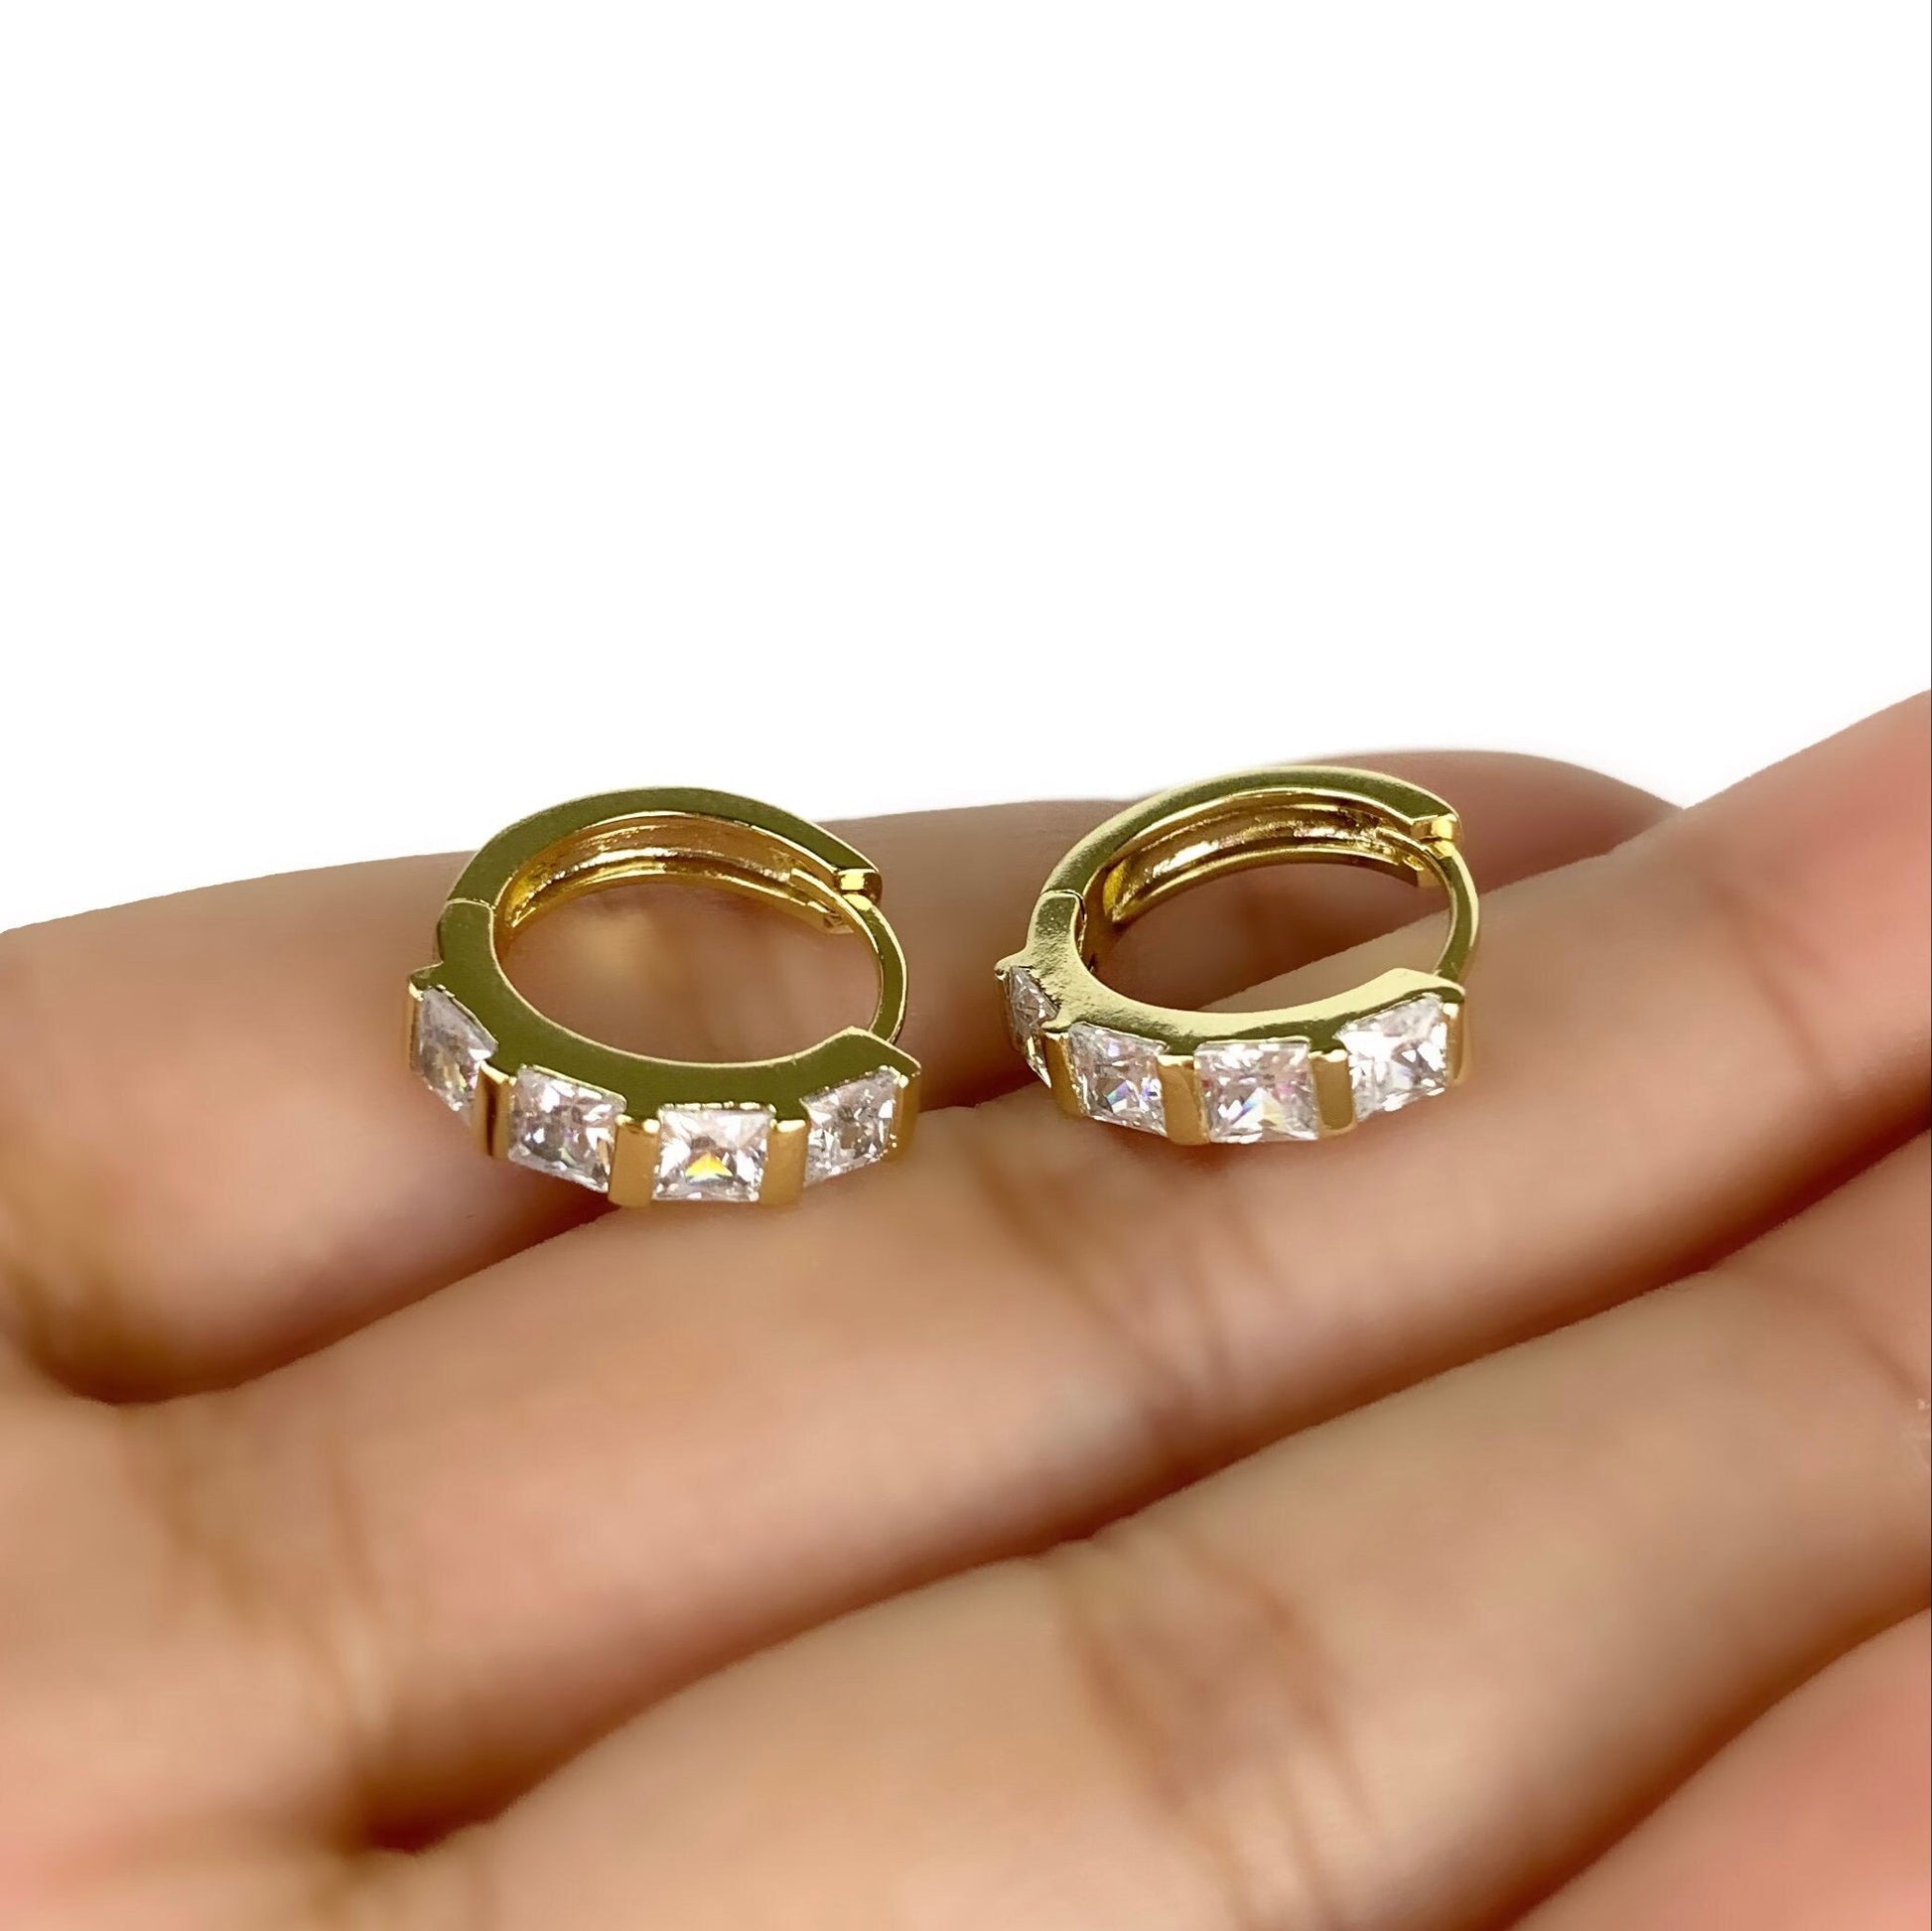 18k Gold Filled 14mm Cubic Zirconia Huggie Hoop Earrings Wholesale Jewelry Making Supplies